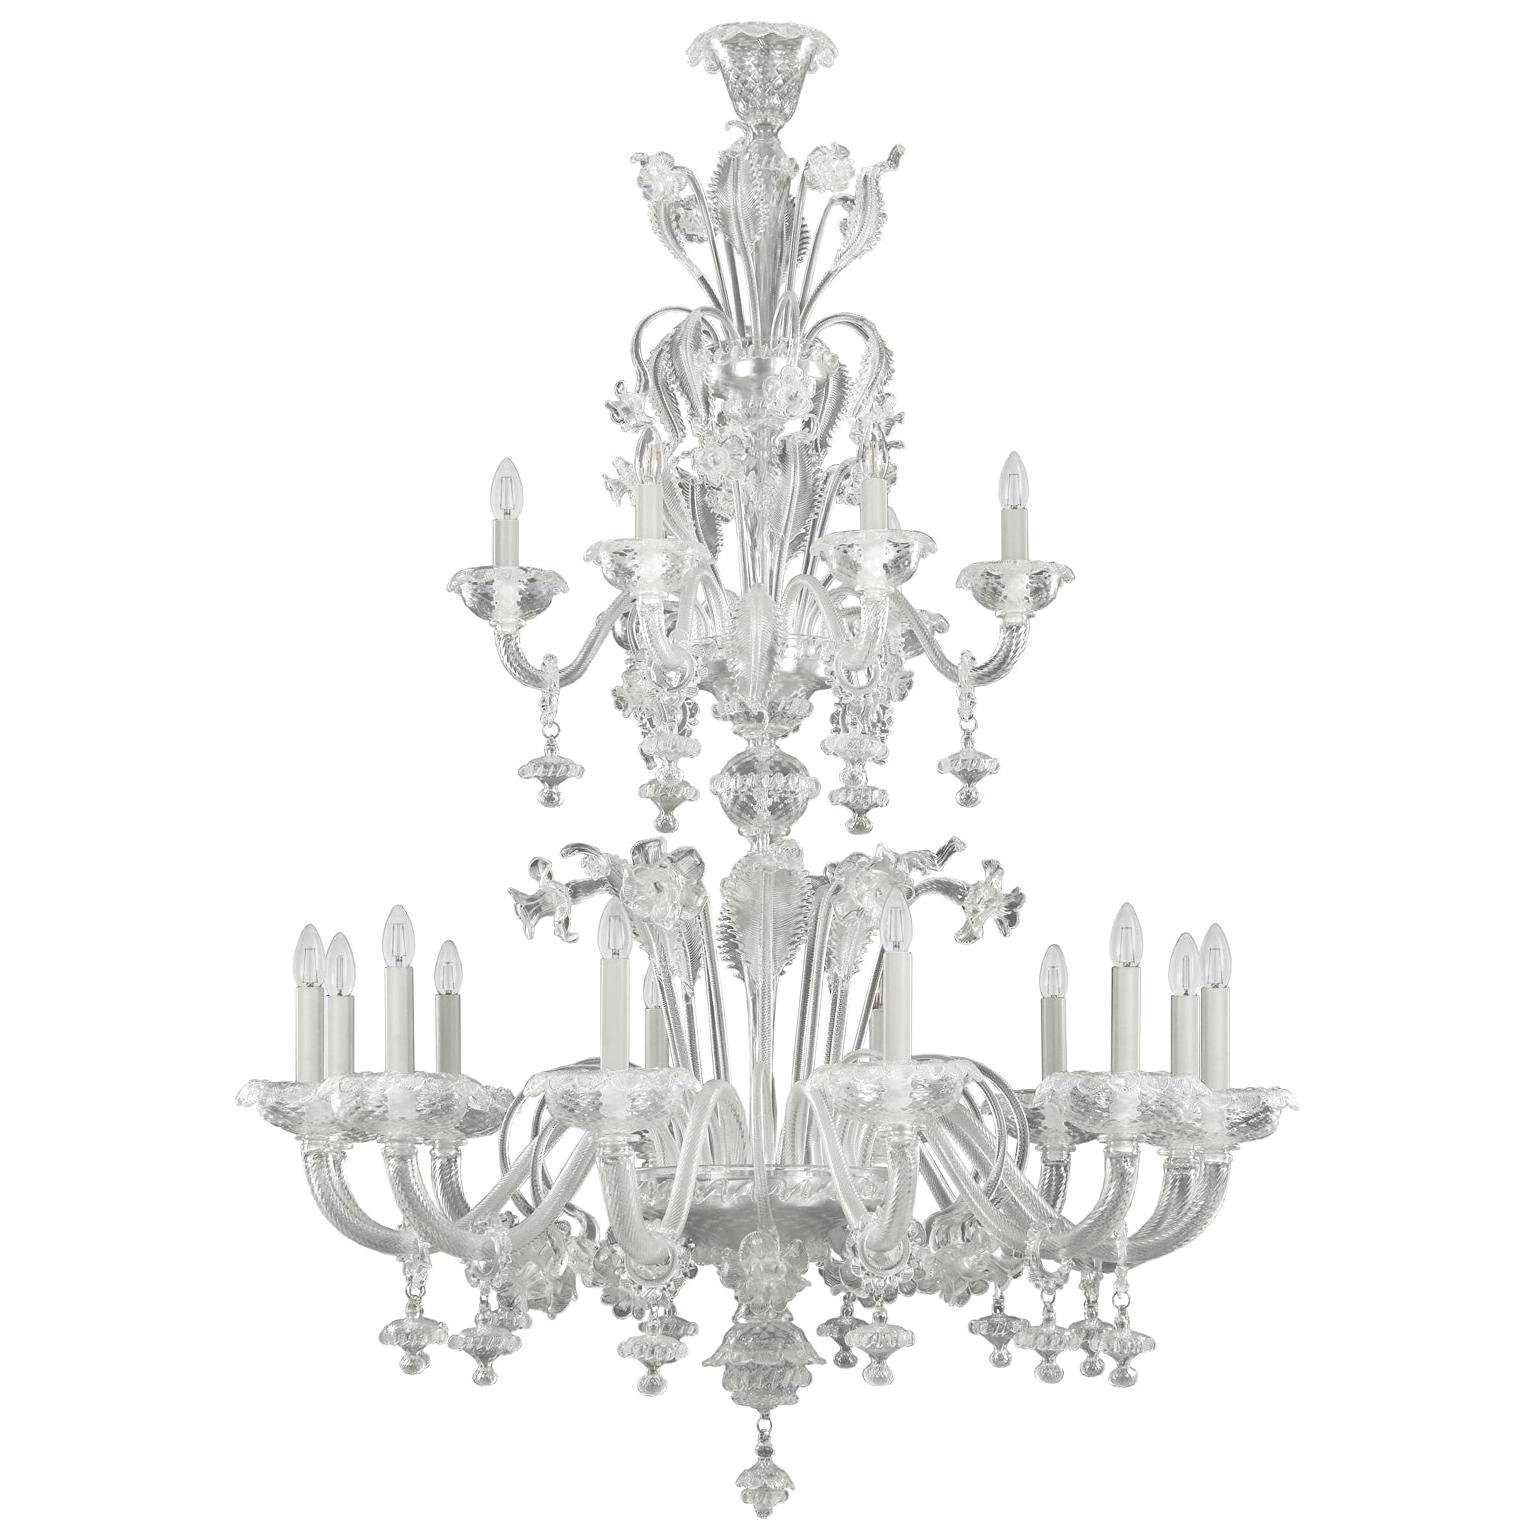 Venetian Chandelier 12+6 arms artistic Crystal Glass Caesar by Multiforme